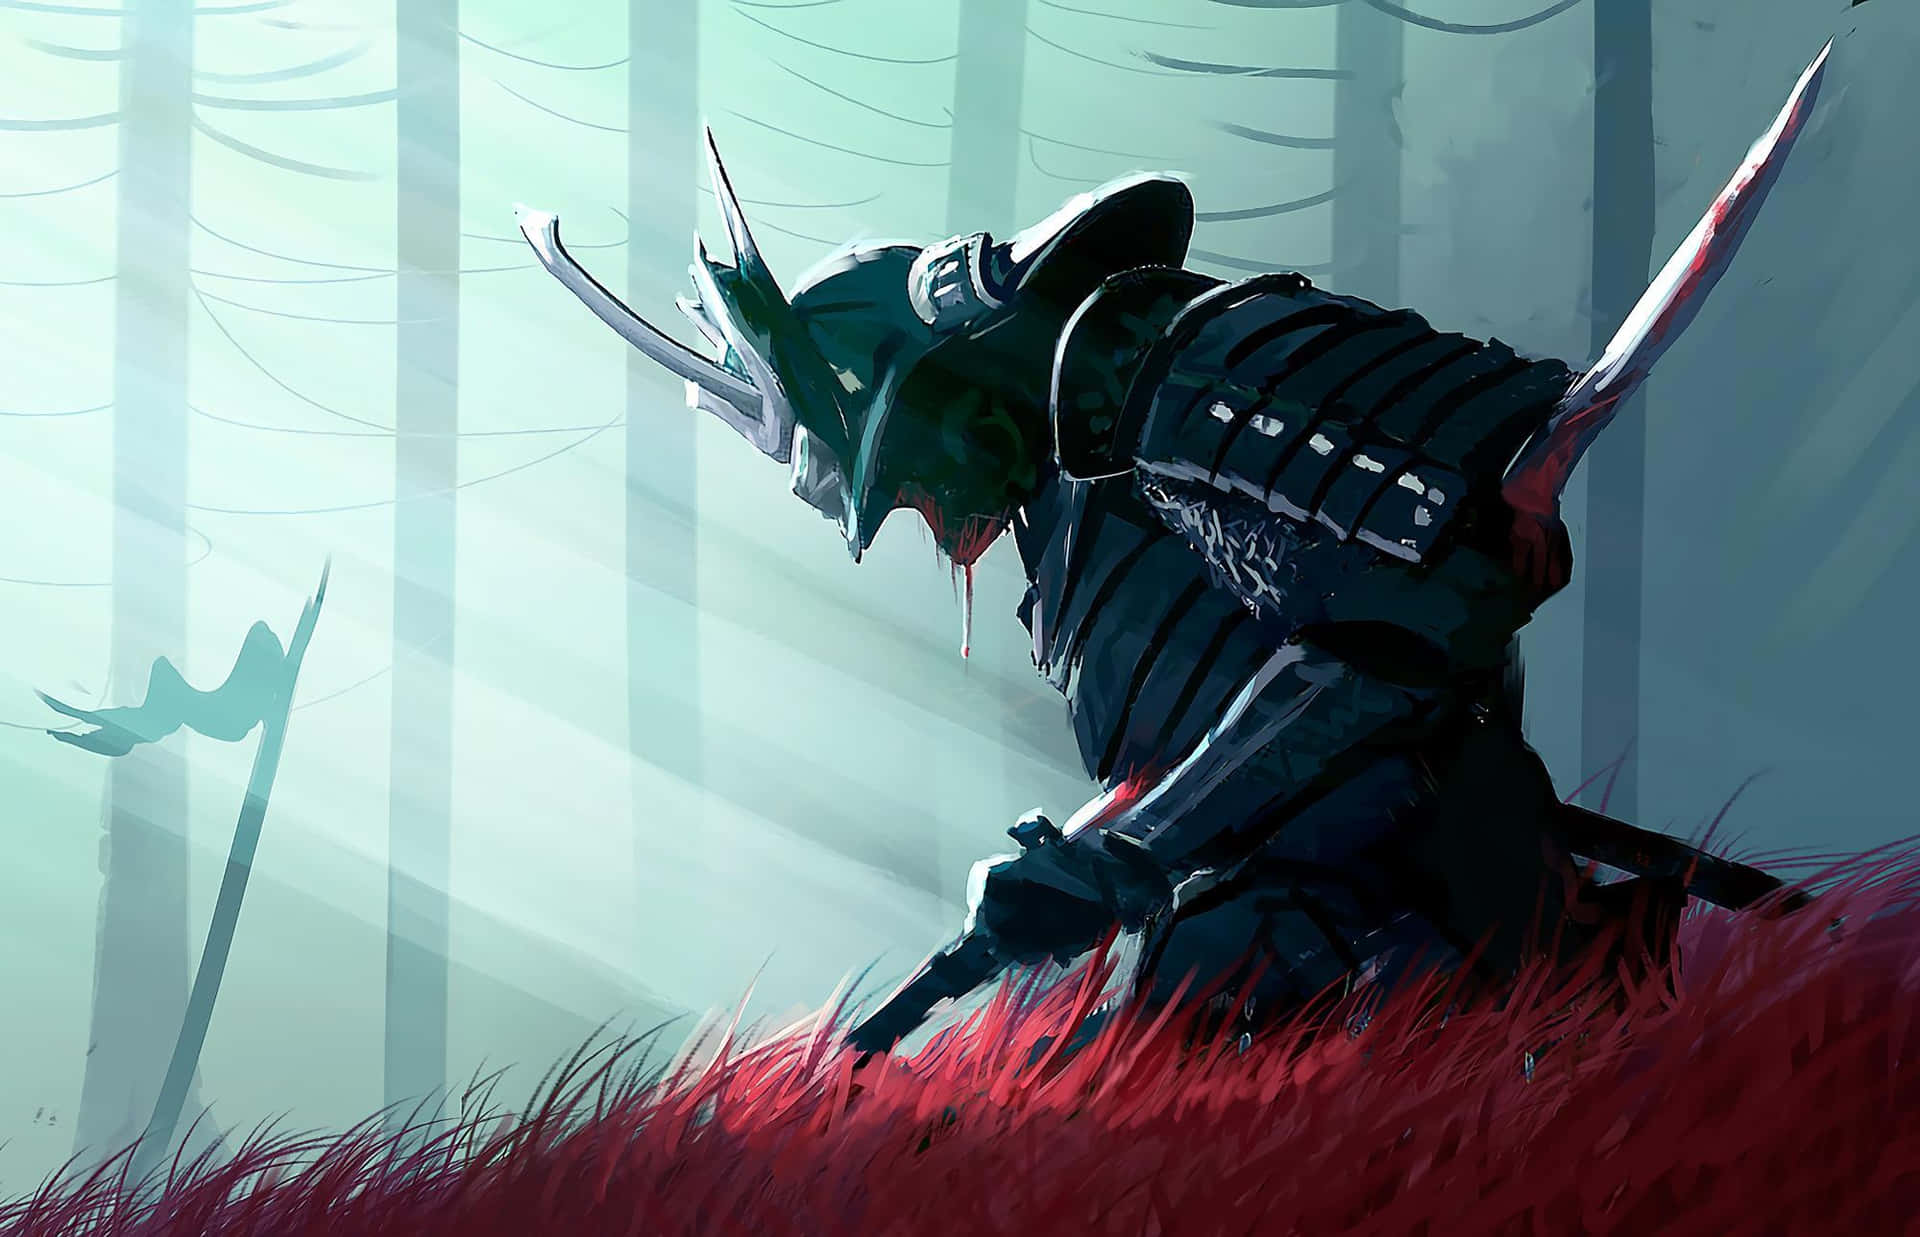 Powerful Samurai Warrior In An Intense Battlefield Background